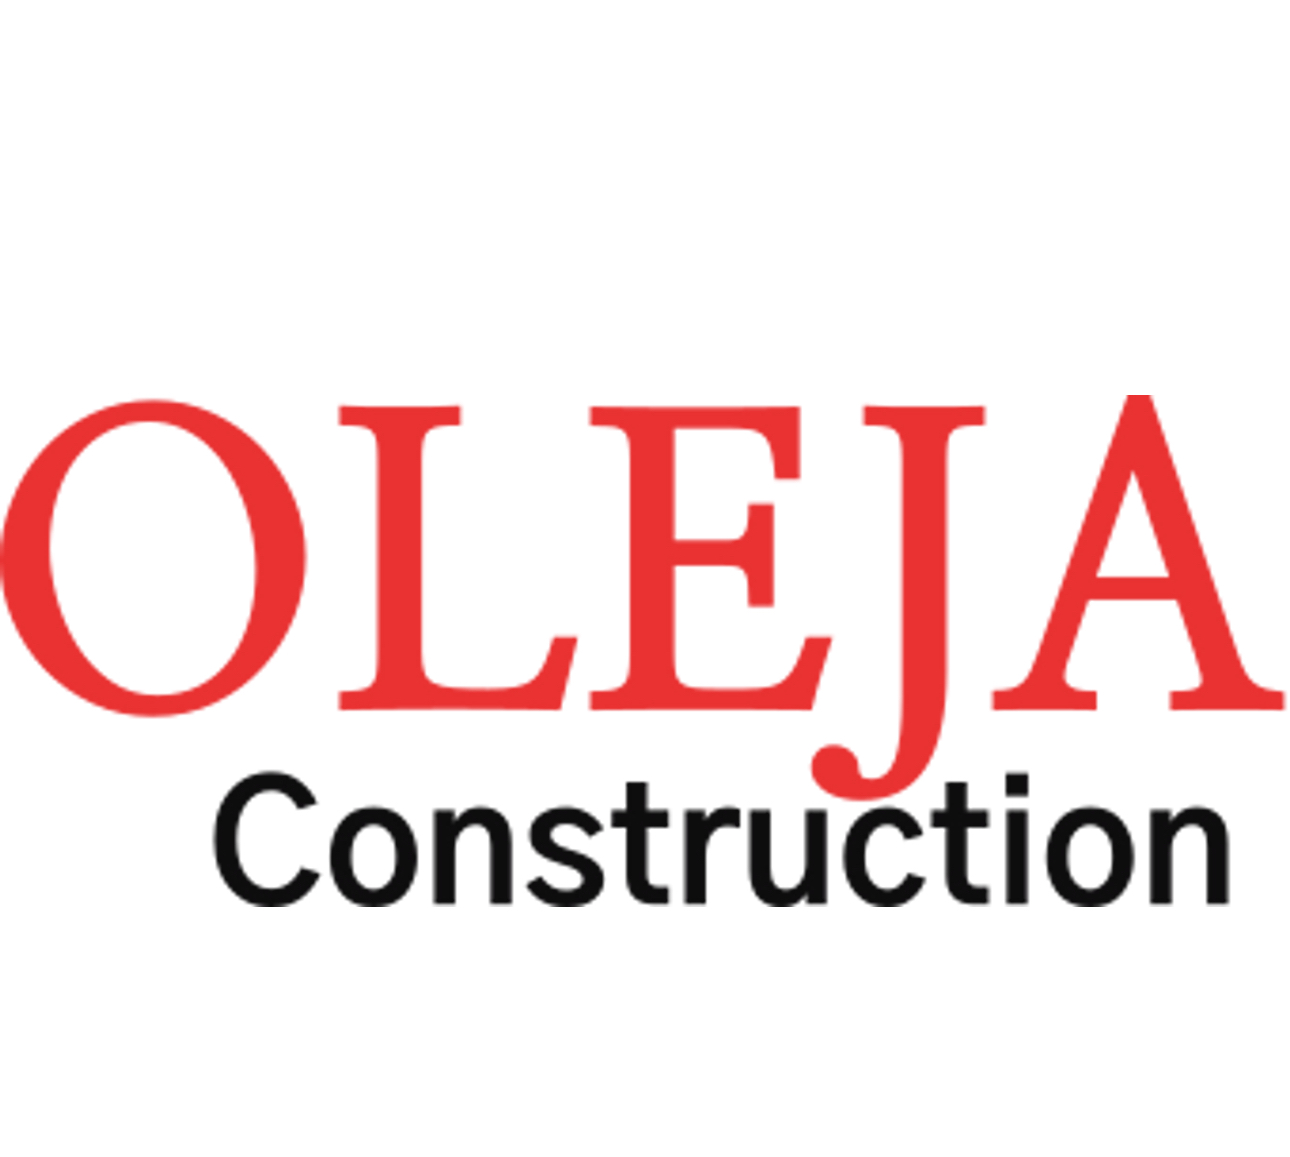 OLEJA Construction